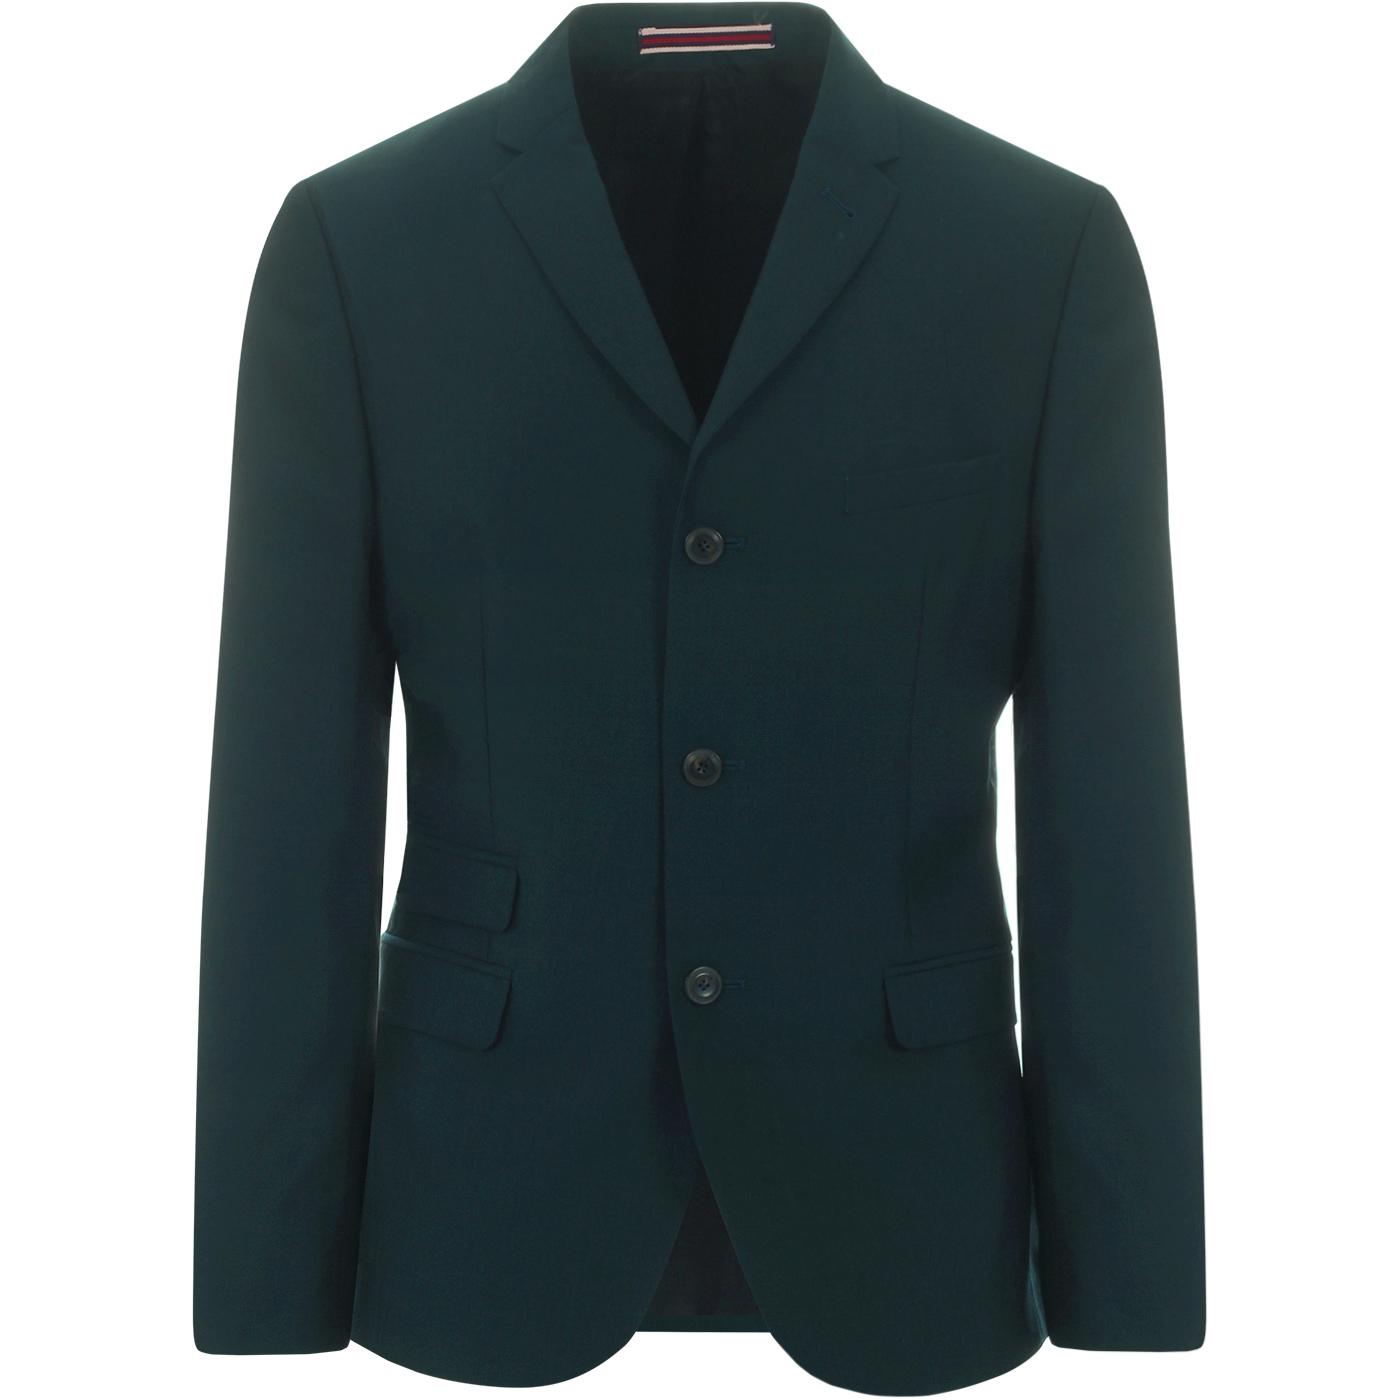 BEN SHERMAN 3 Button Tonic Suit Jacket (Sea Moss)